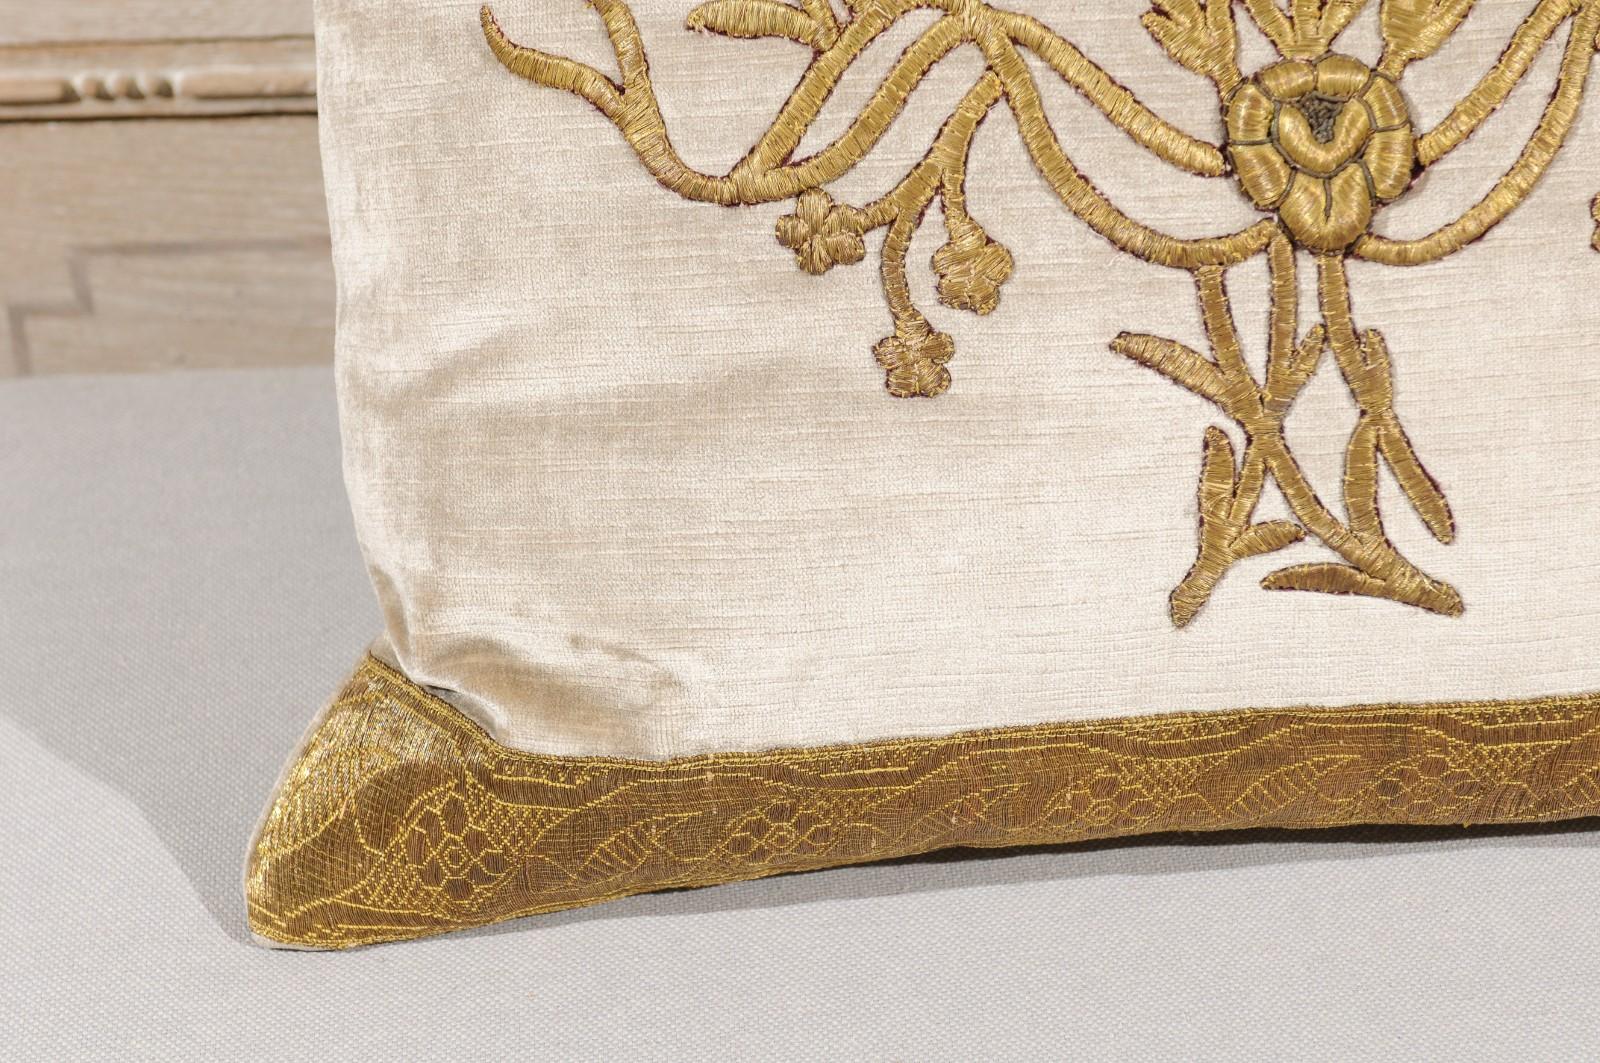 Antique Ottoman Empire Raised Gold Metallic Embroidery on Silver Velvet Pillows For Sale 1